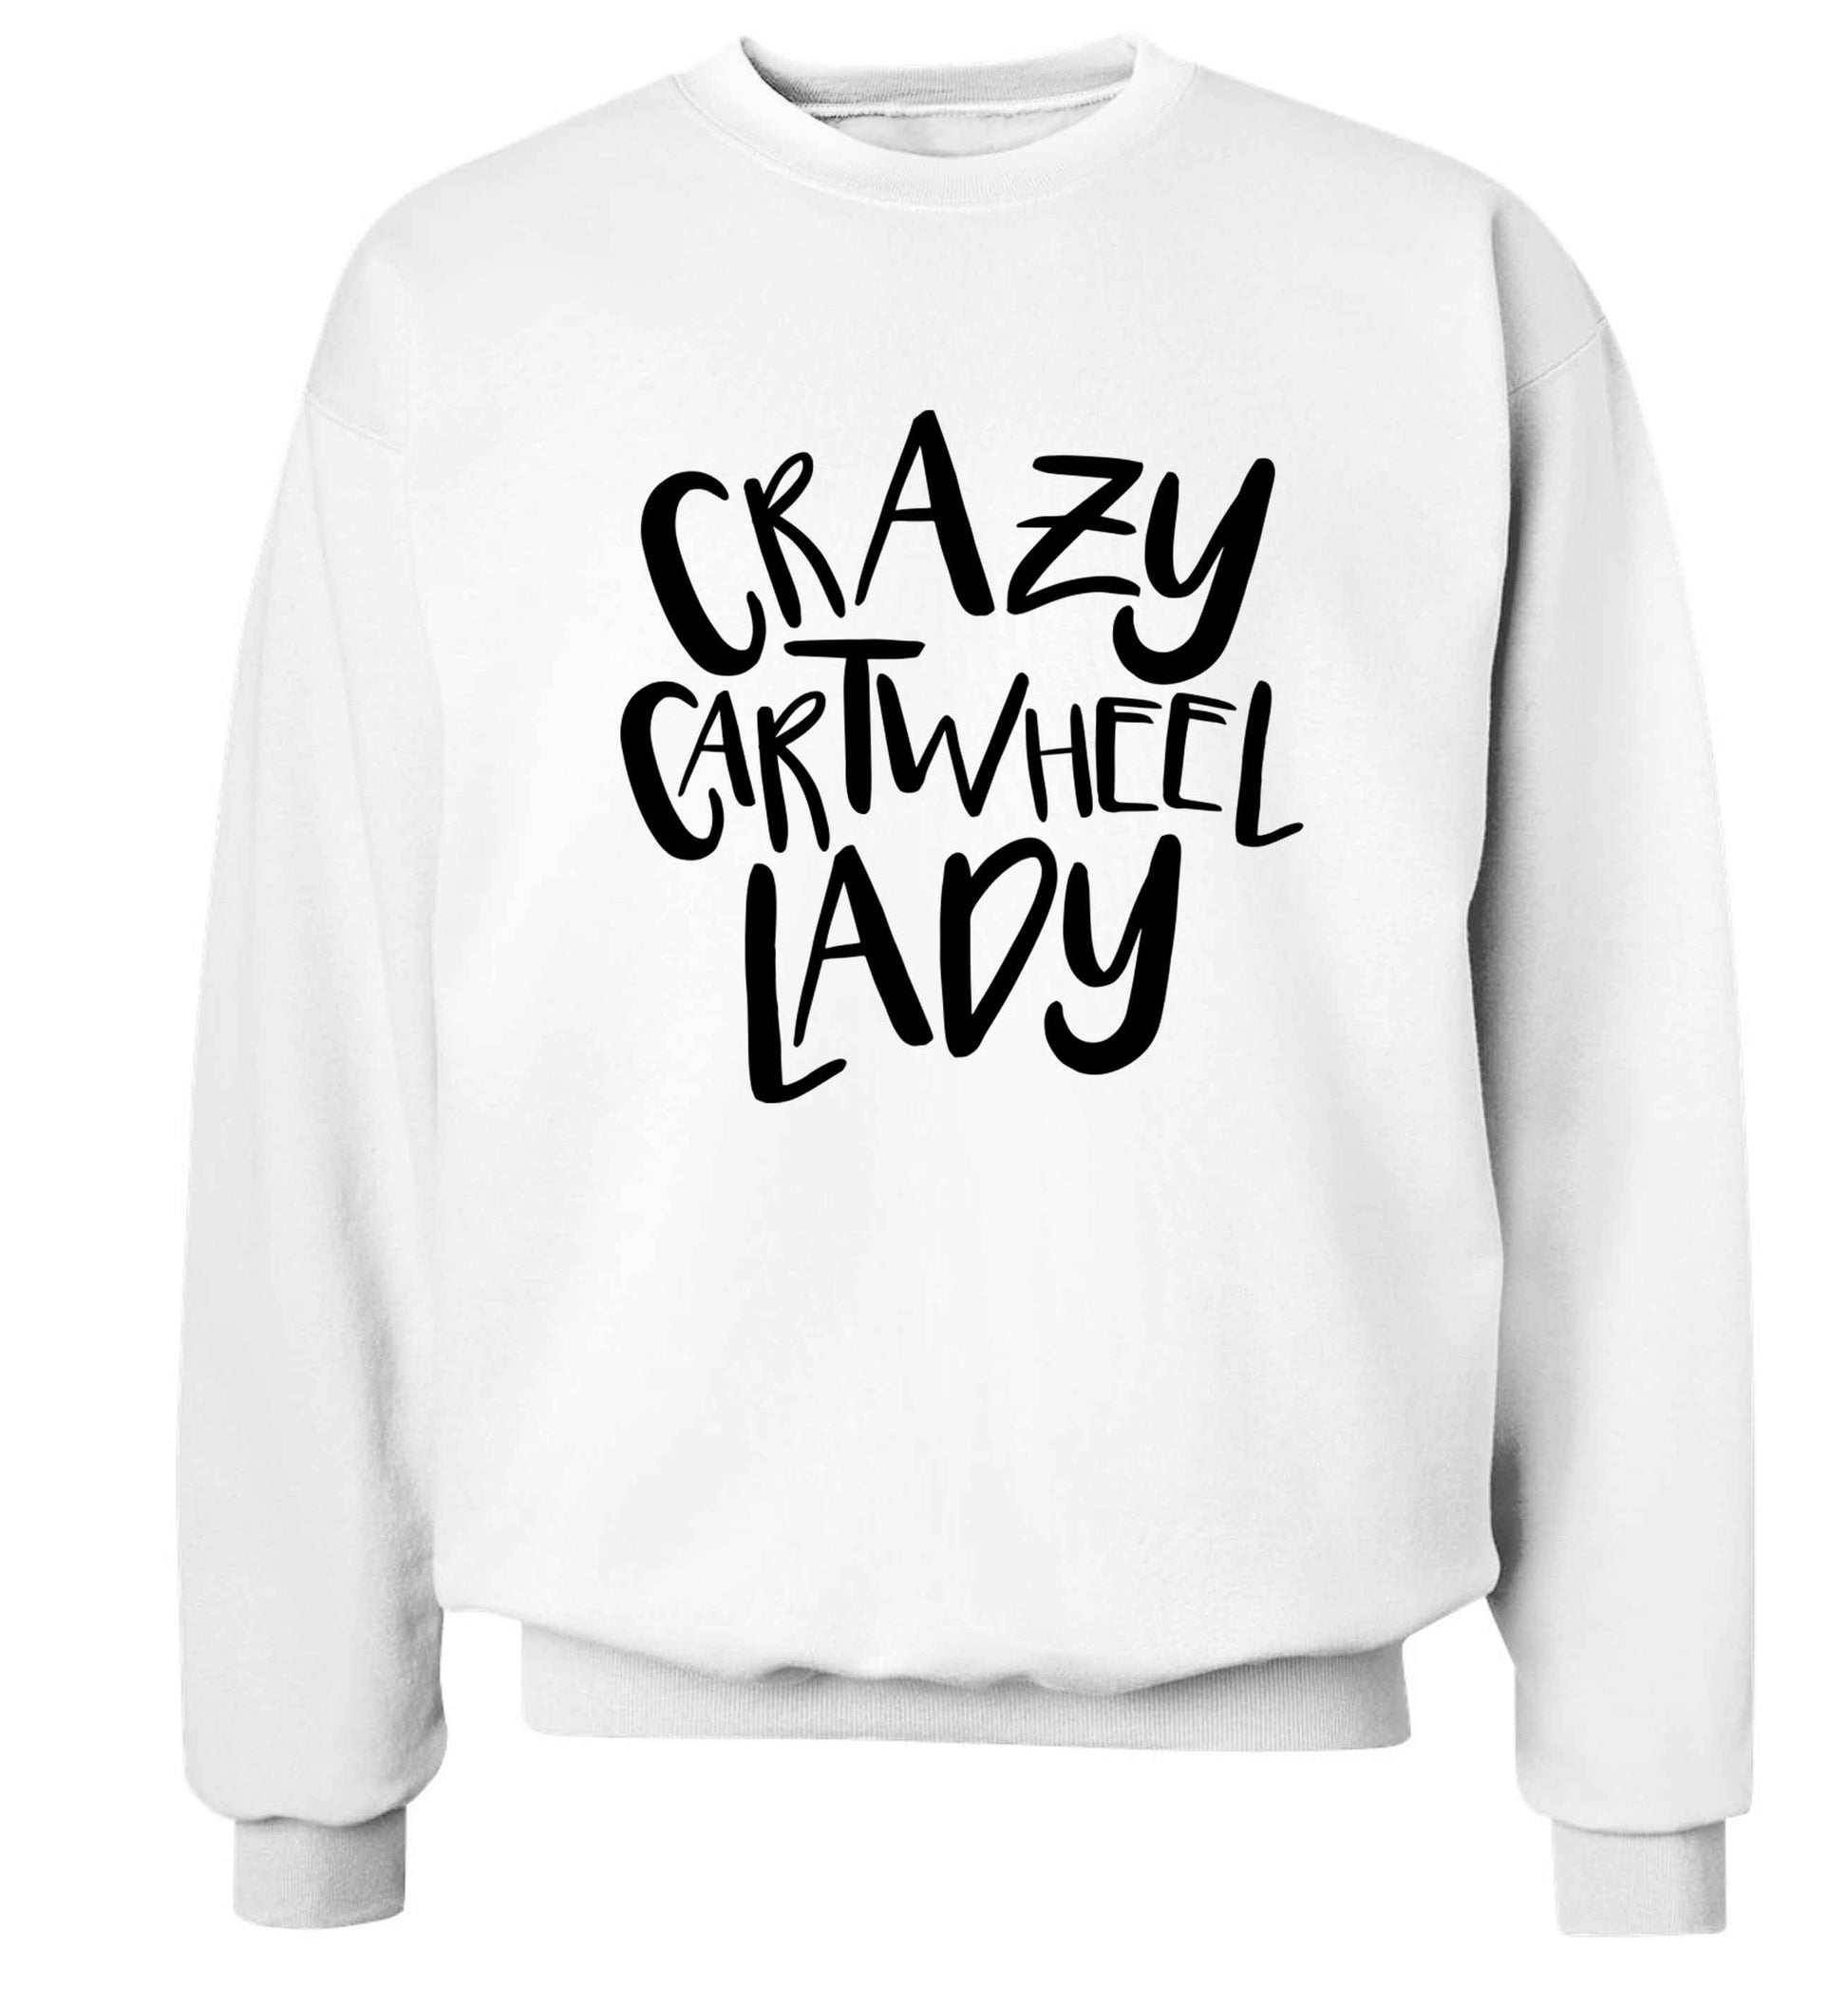 Crazy cartwheel lady Adult's unisex white Sweater 2XL